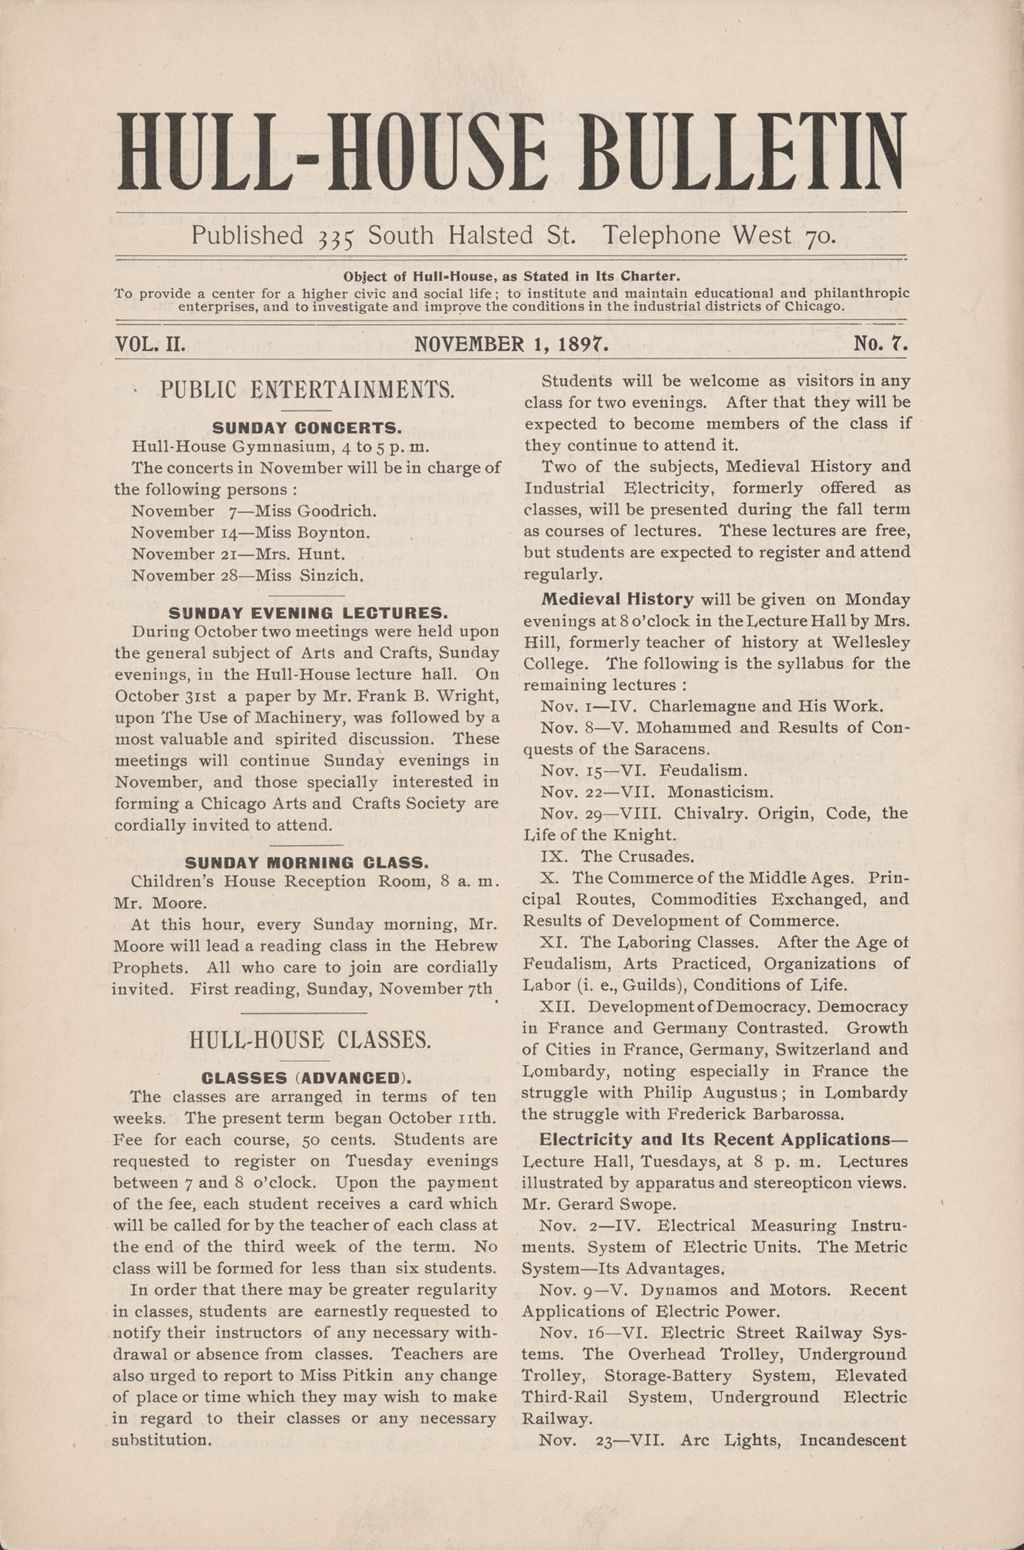 Hull-House Bulletin, vol. 2, no. 7, 1897: Nov. 1